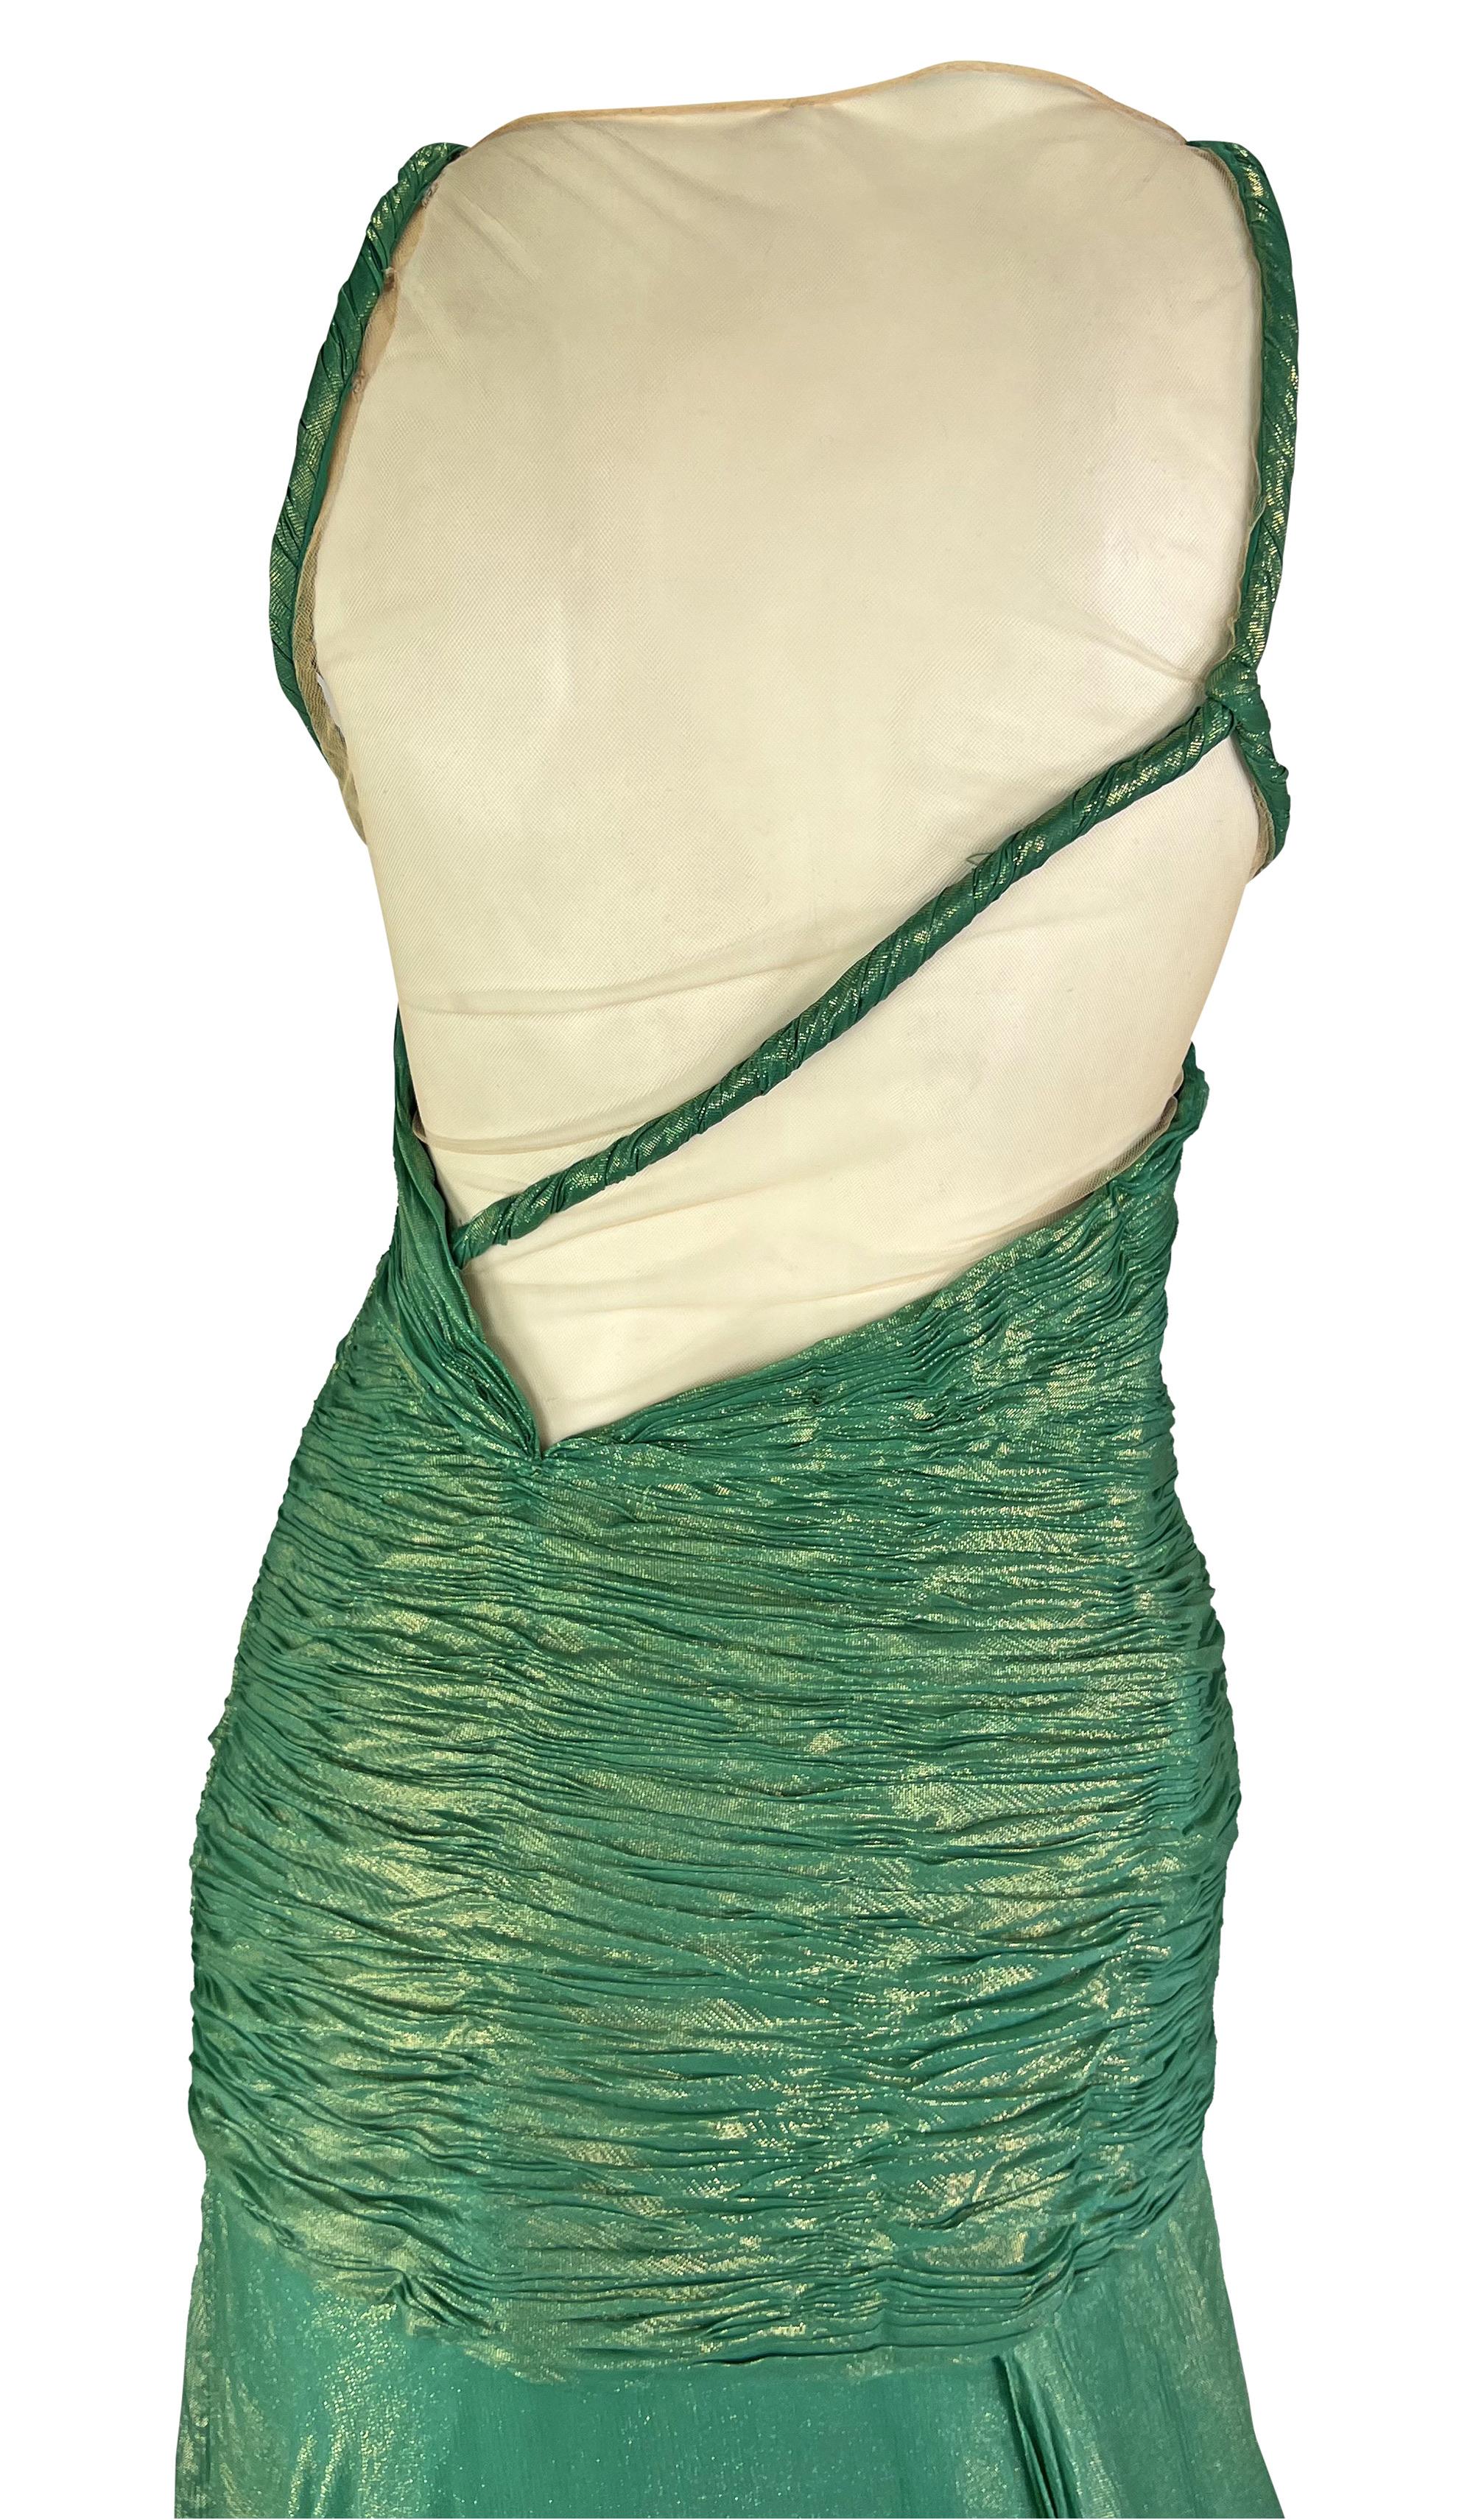 S/S 2004 Atelier Versace by Donatella Metallic Green Halterneck Runway Gown  For Sale 5